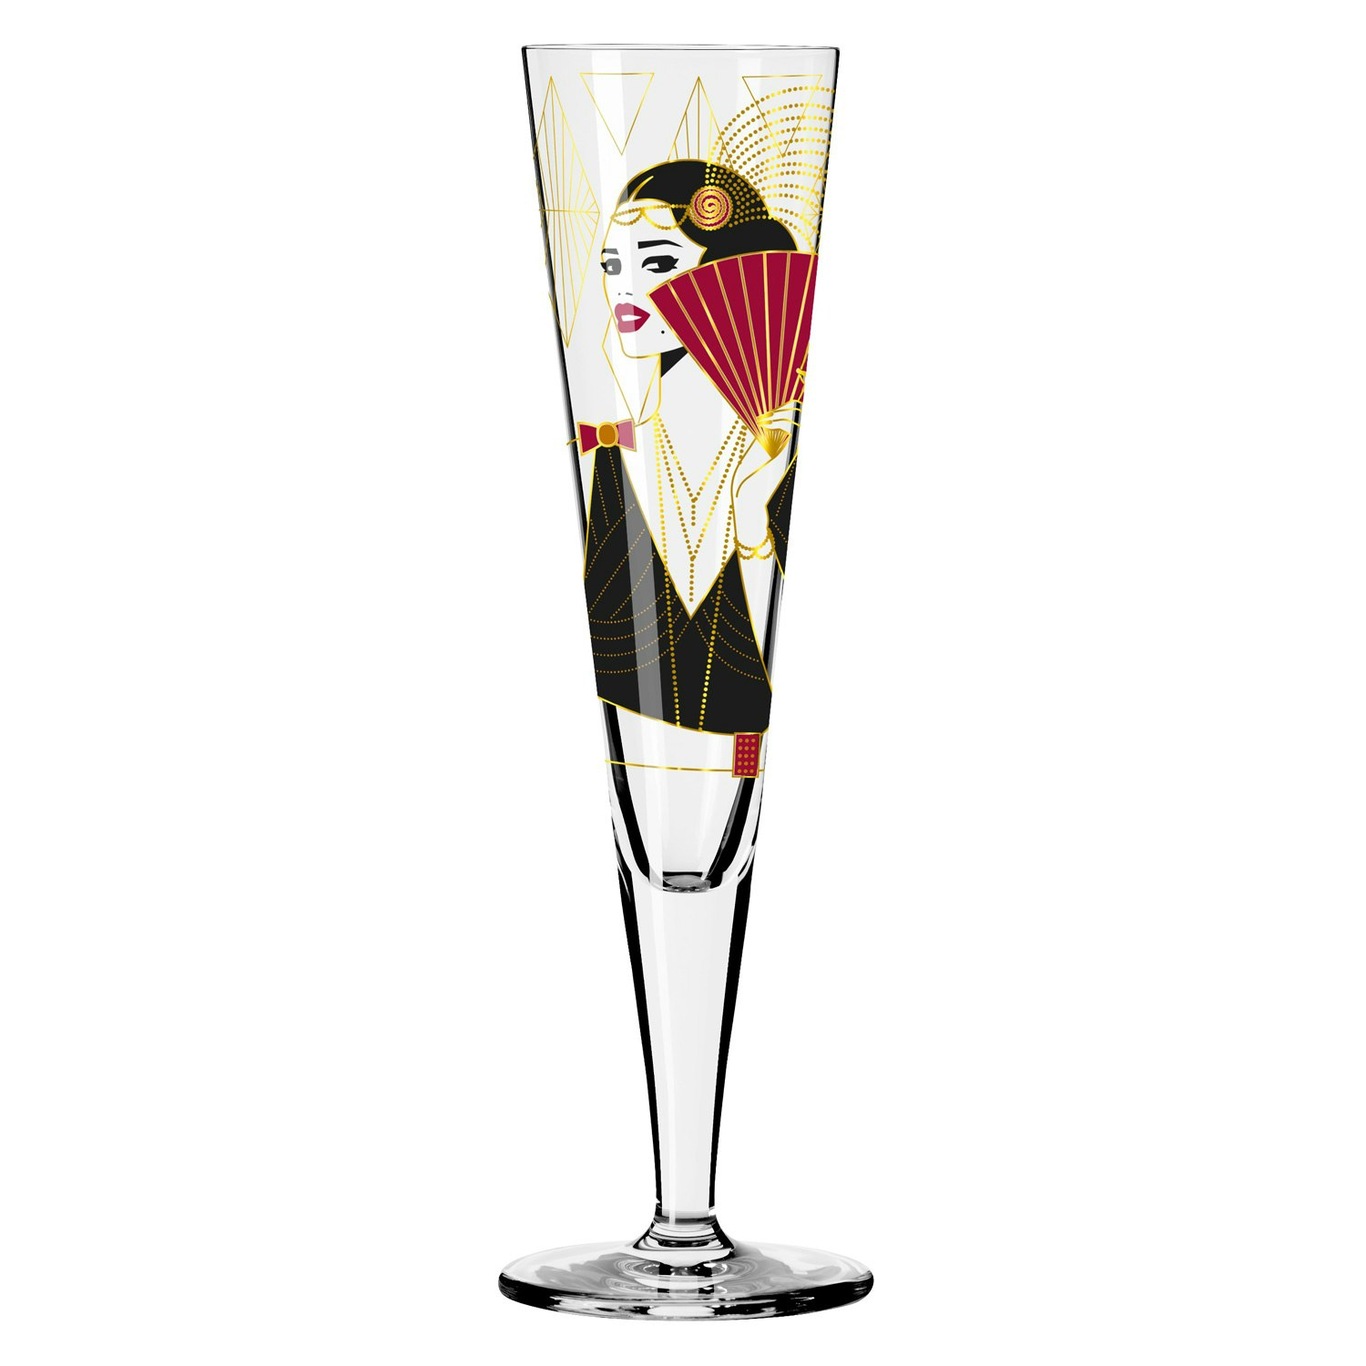 Goldnacht Champagnerglas, NO: 28